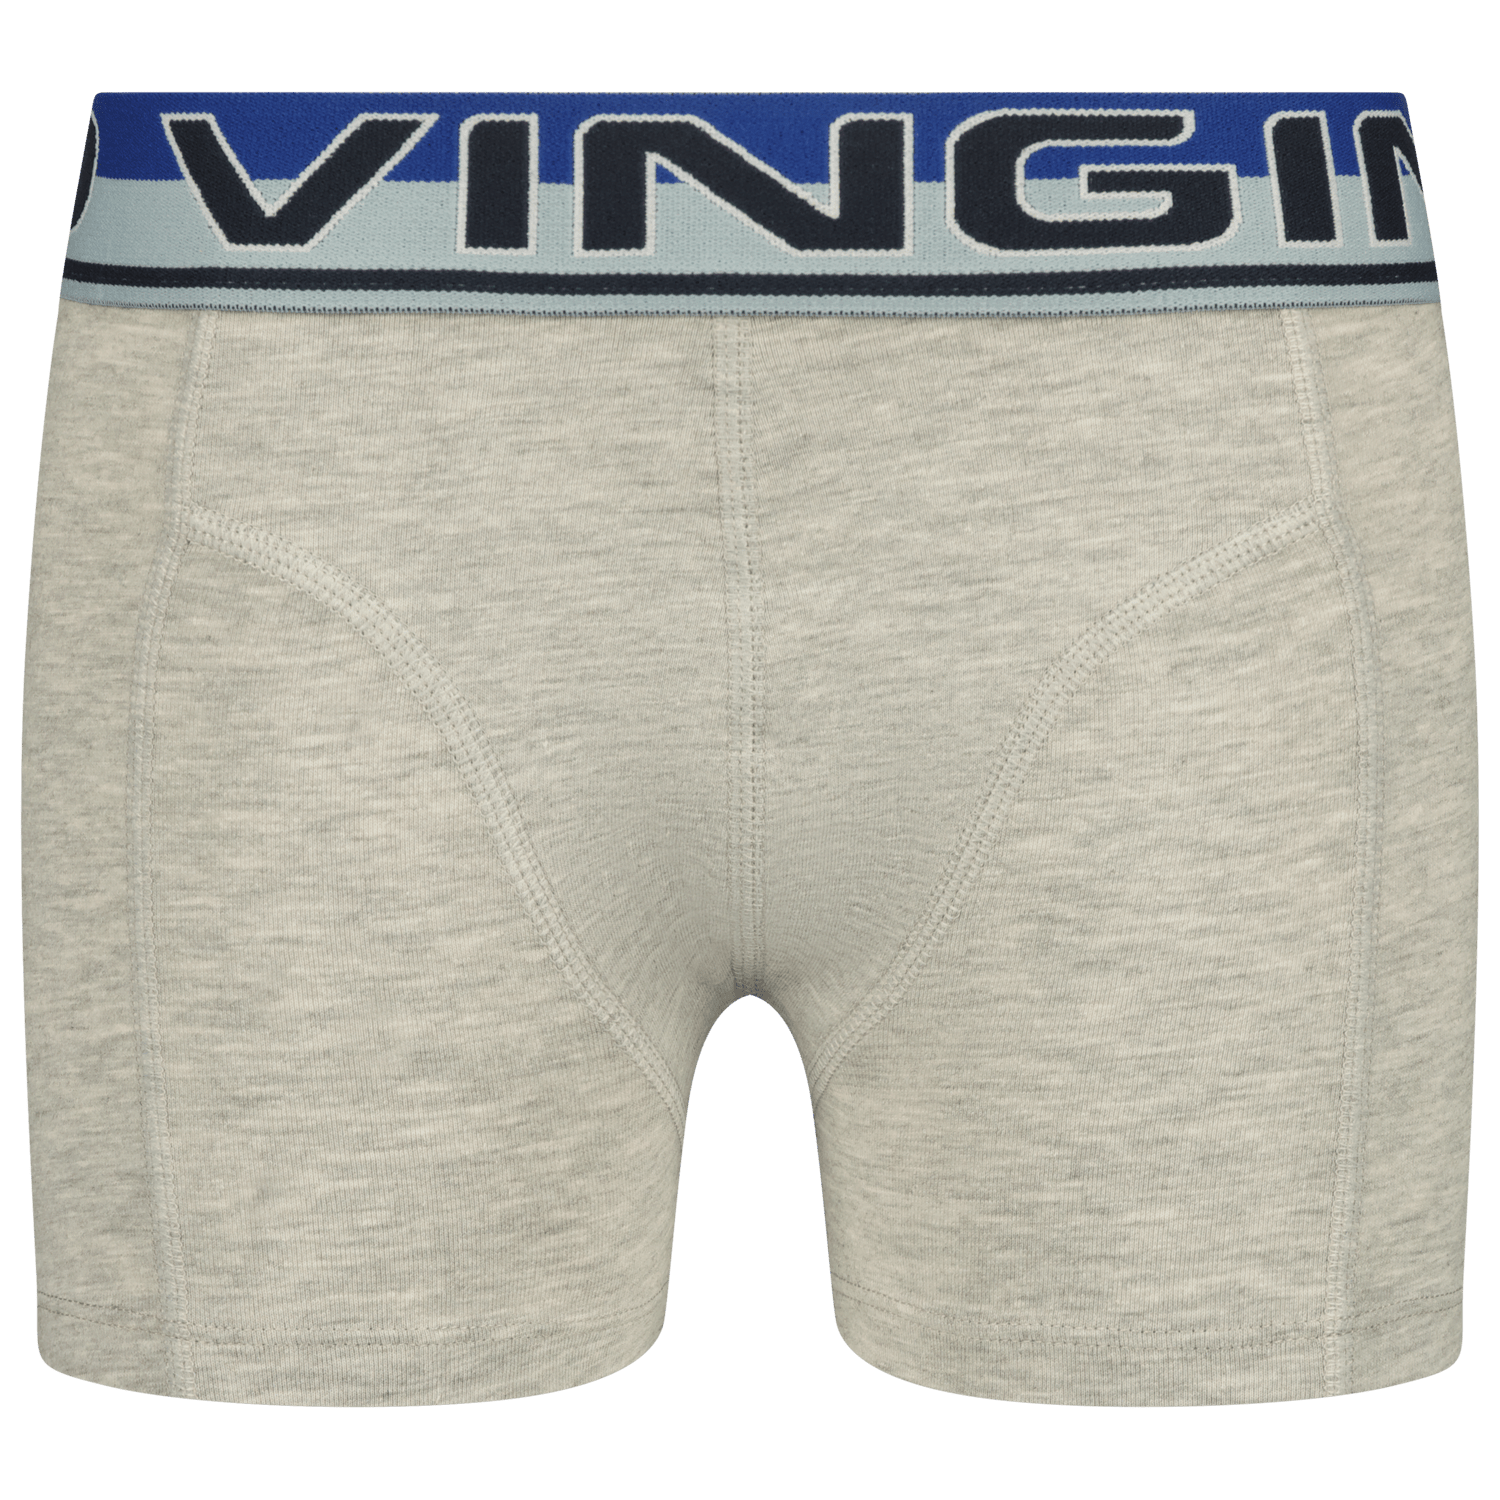 VINGINO Boxershort B-241-5 blue melee 3 pack